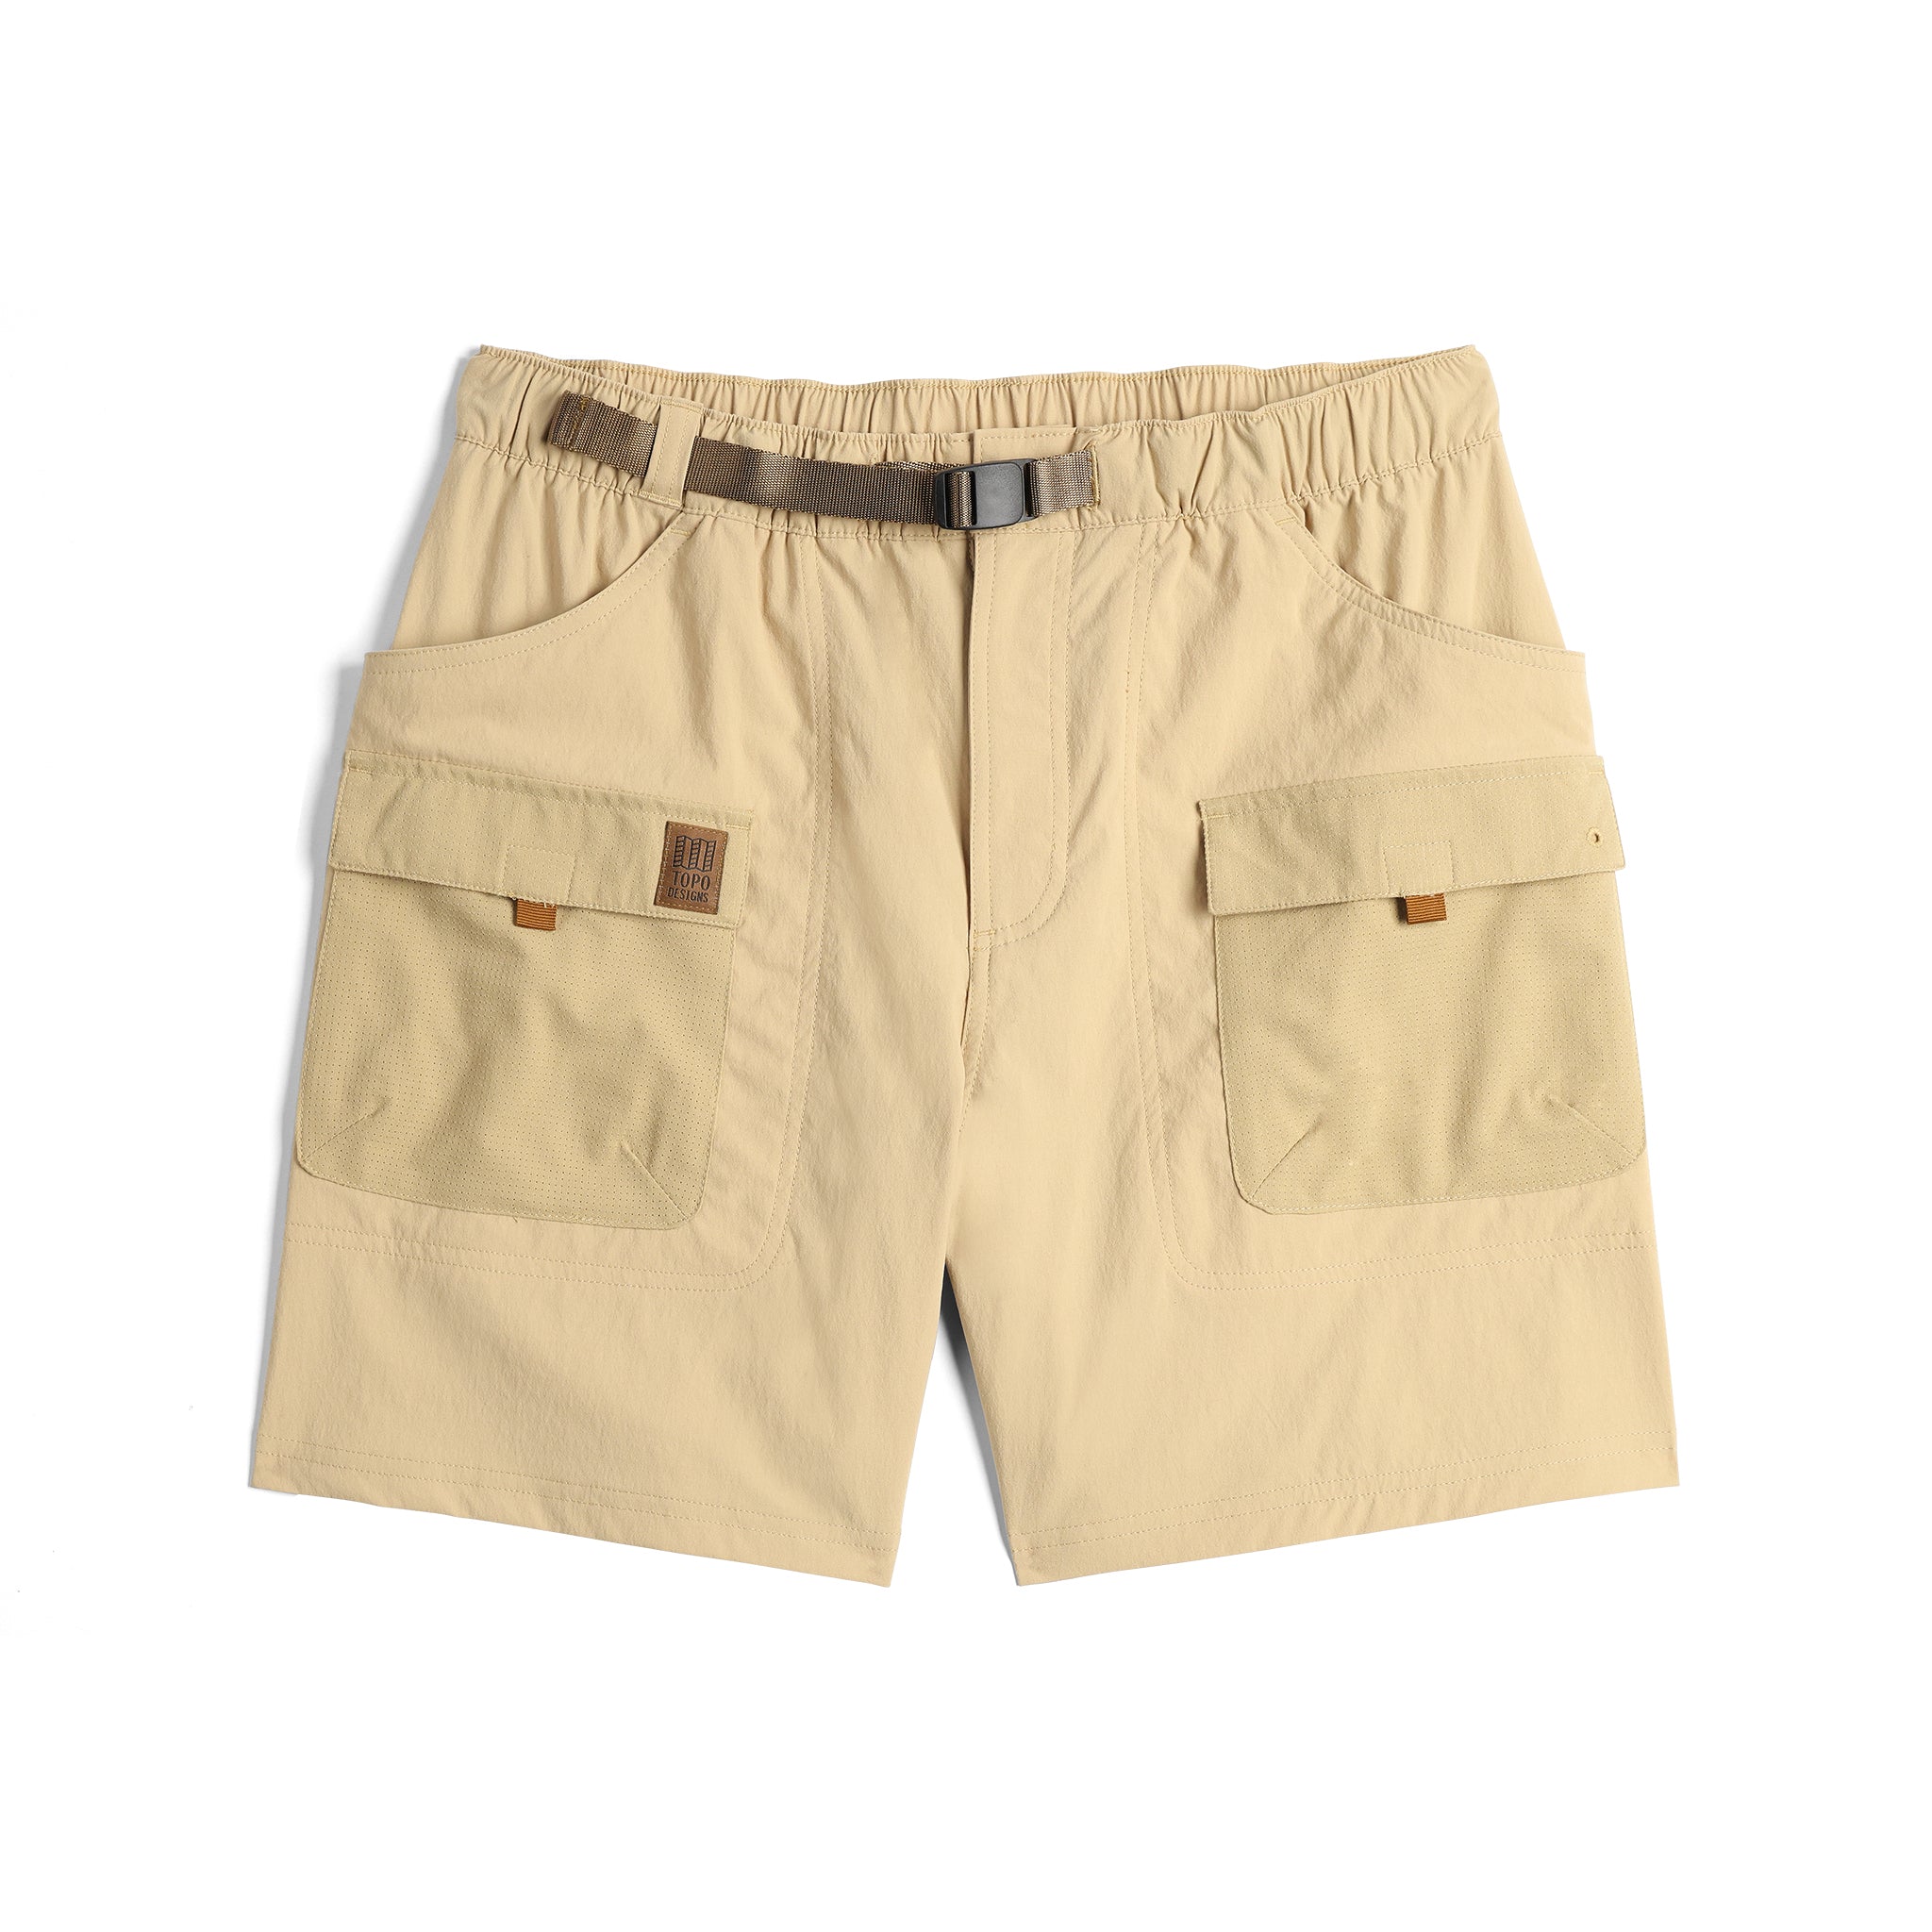 Front View of Topo Designs Retro River Shorts - Men's in "Sahara"